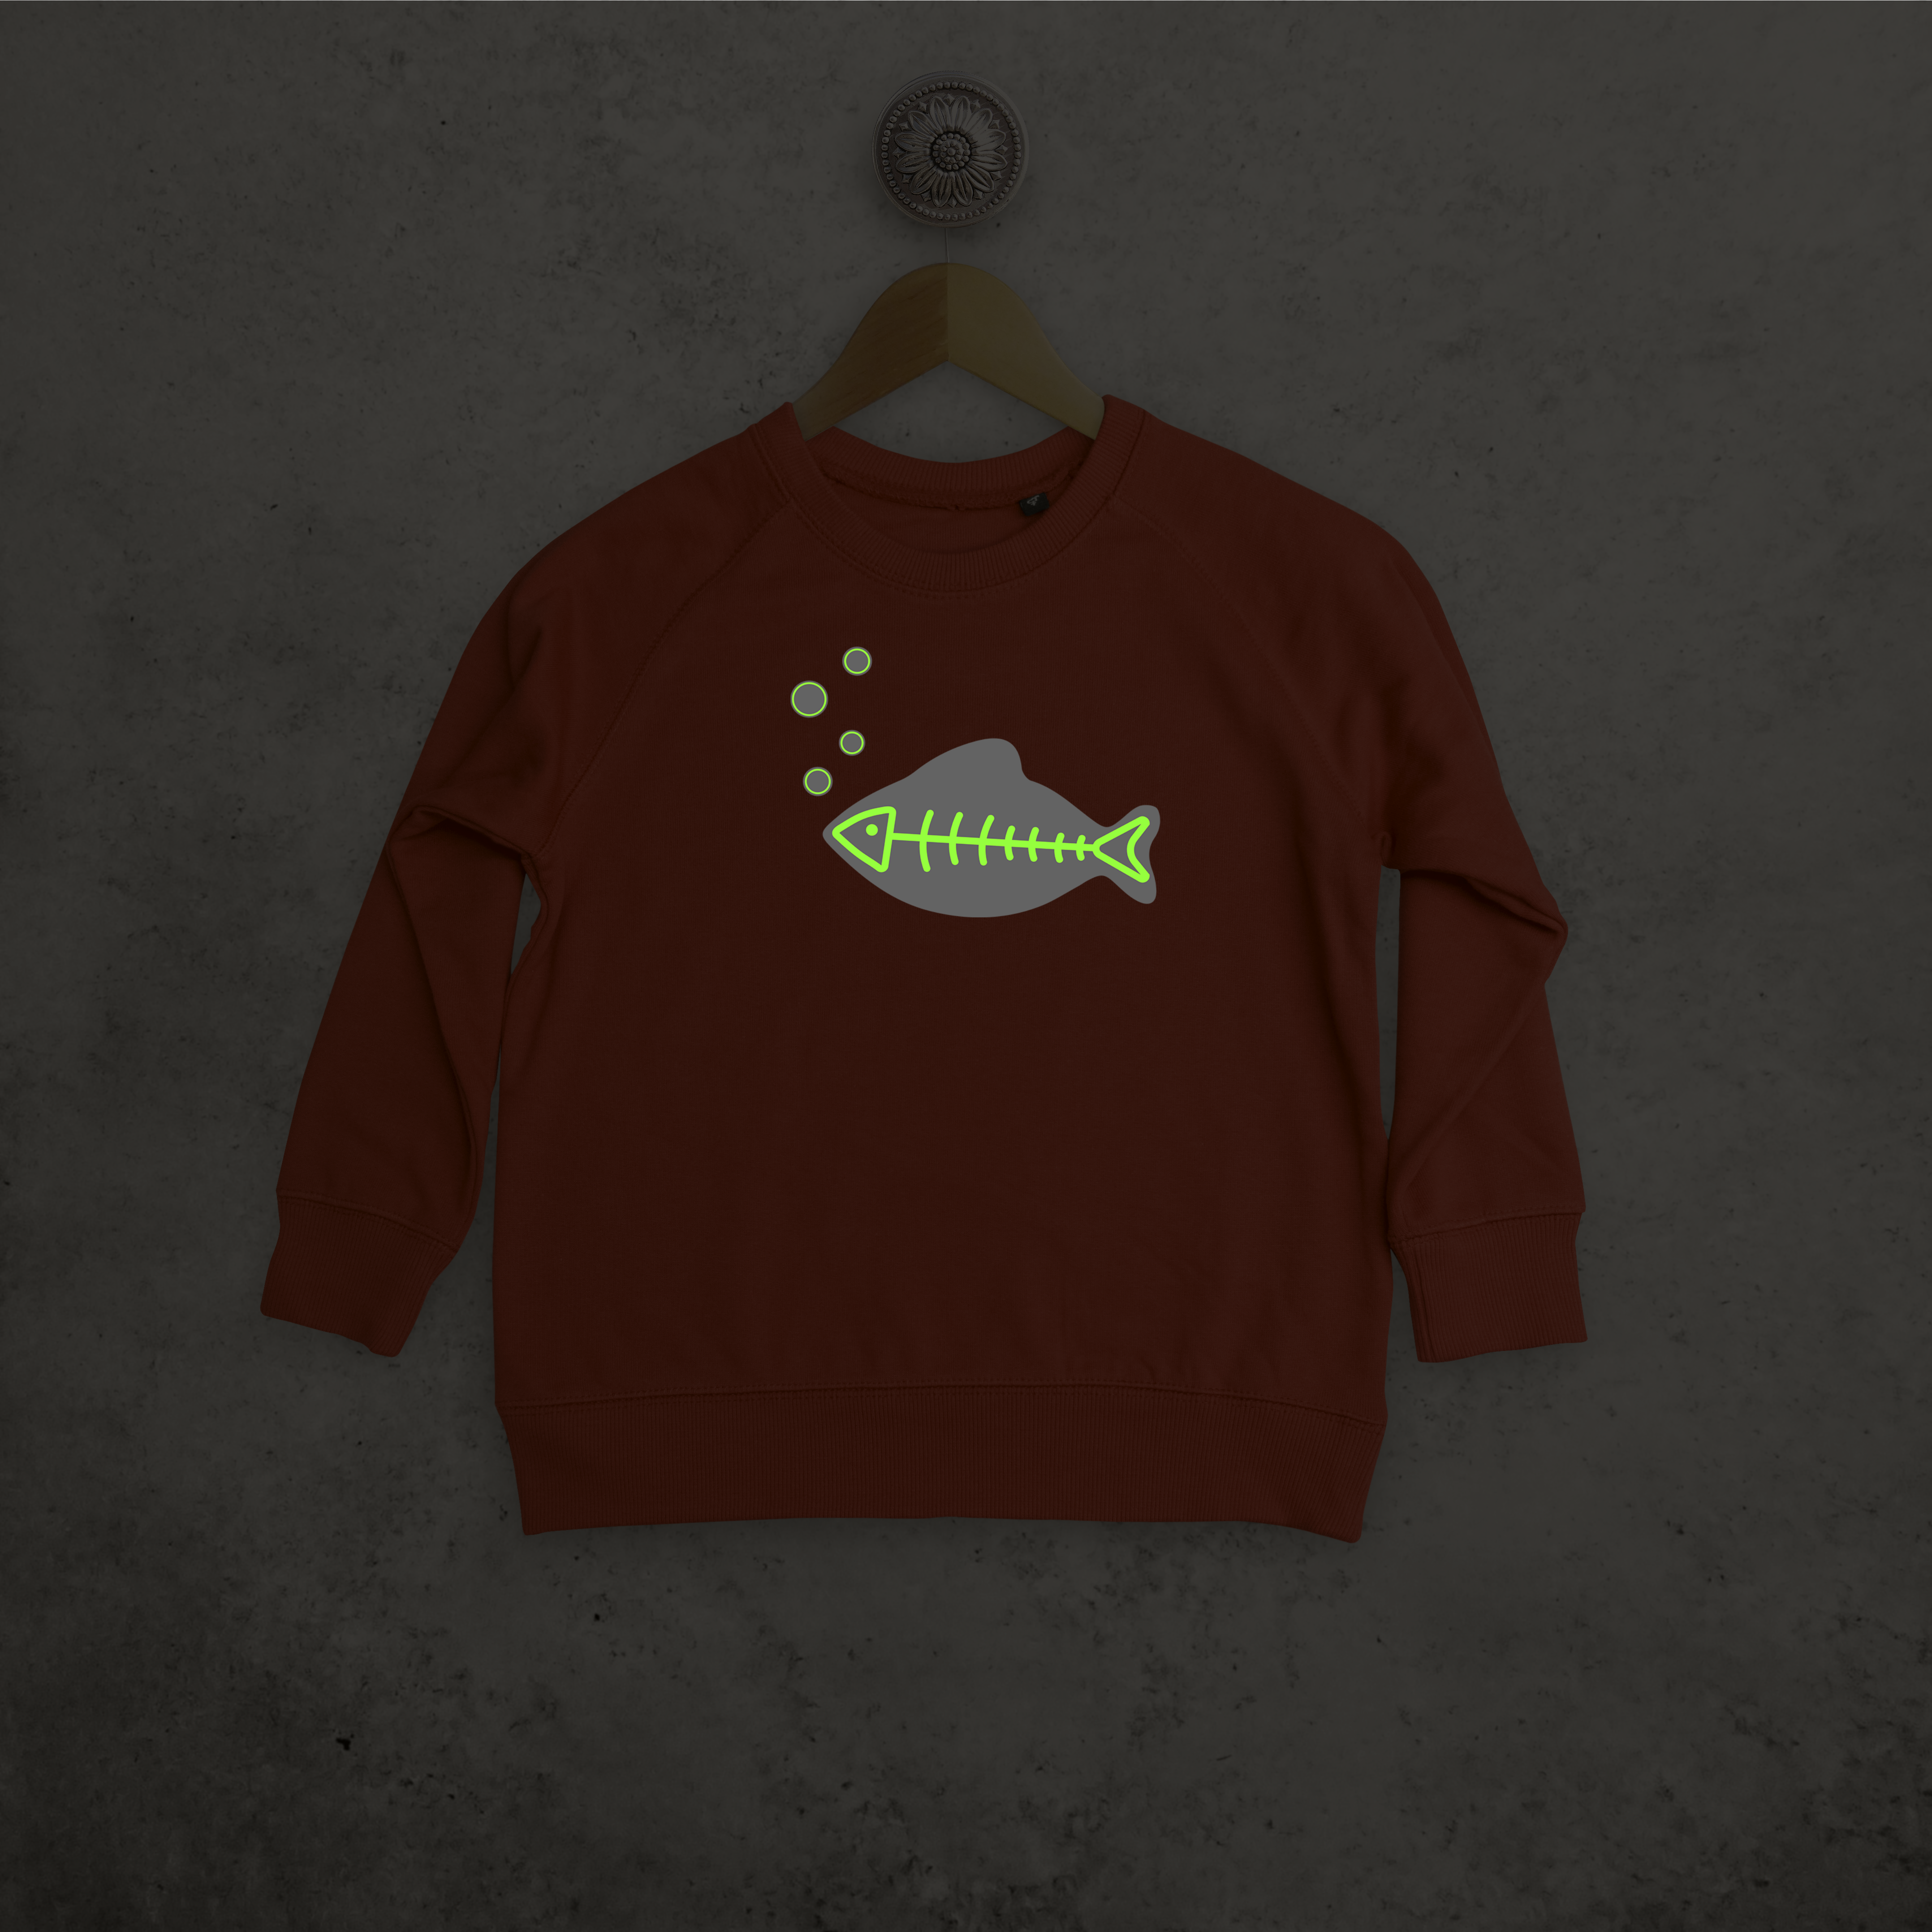 Fish glow in the dark kids sweater